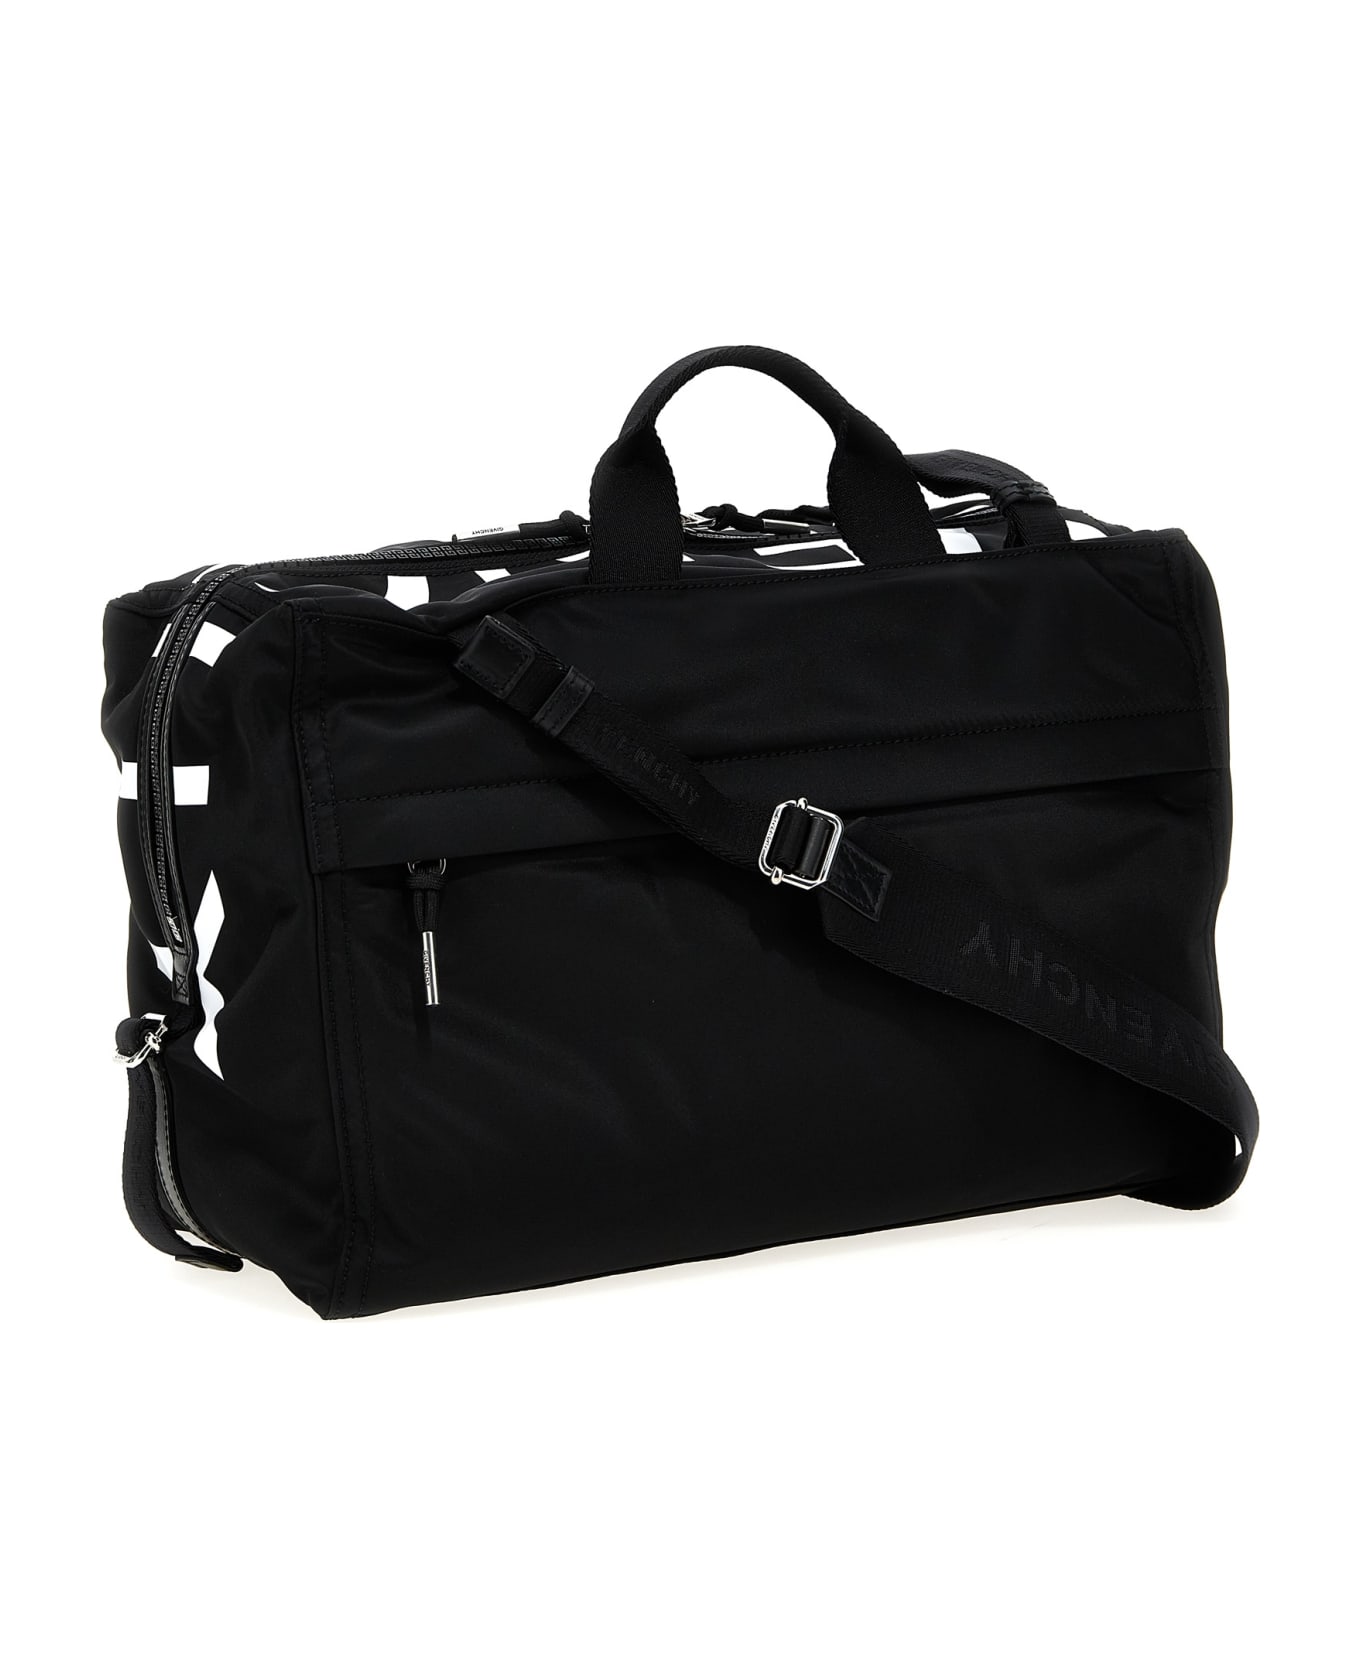 Givenchy Pandora Medium Bag - Black White トラベルバッグ